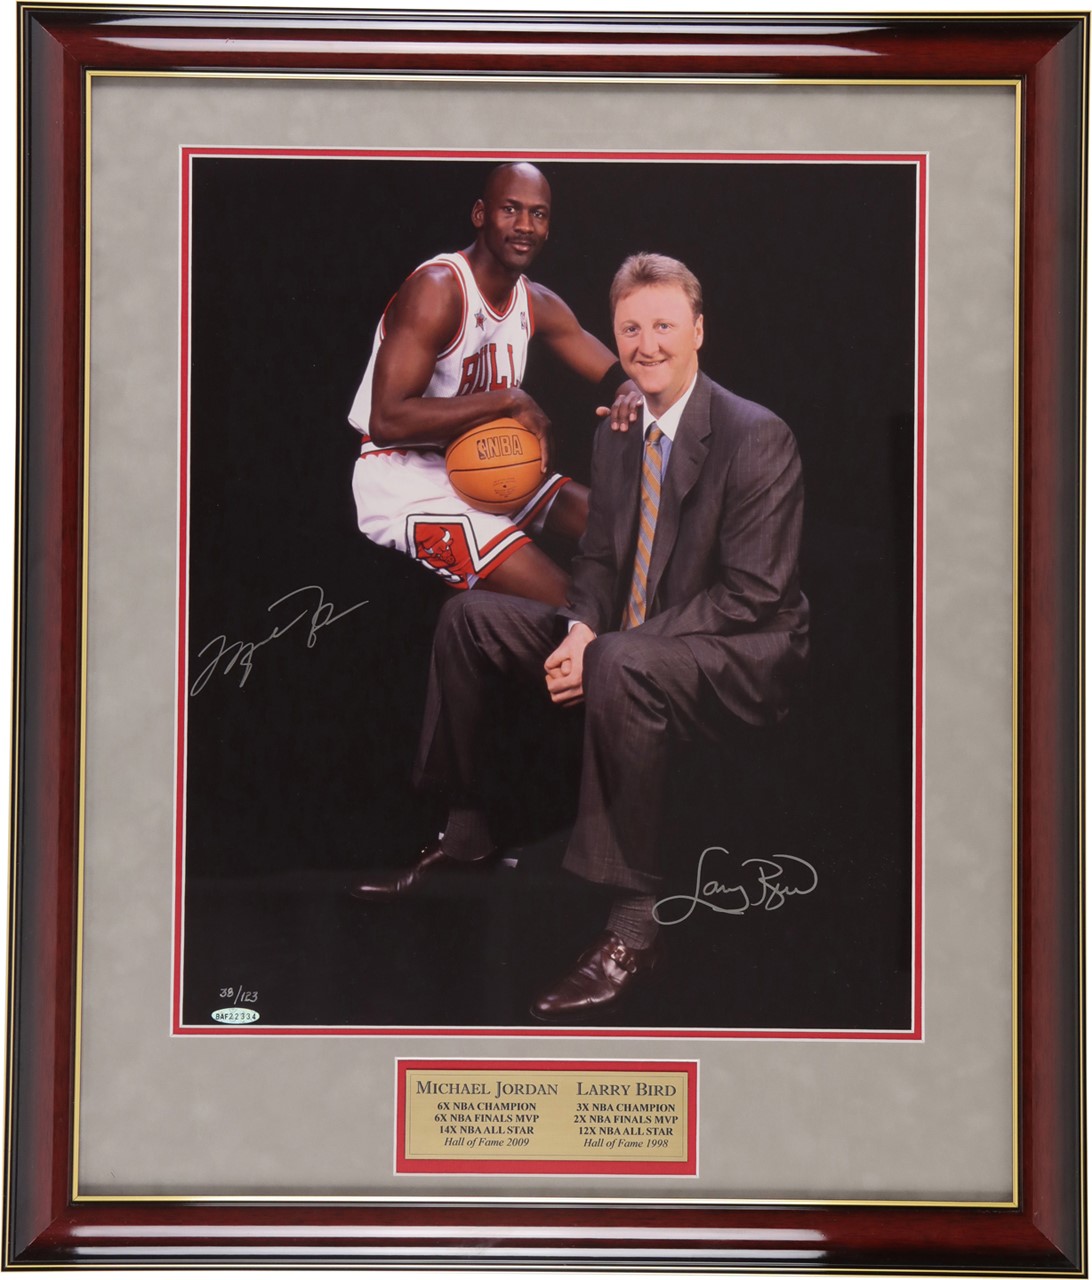 - Michael Jordan and Larry Bird Signed Photograph 38/123 (UDA)